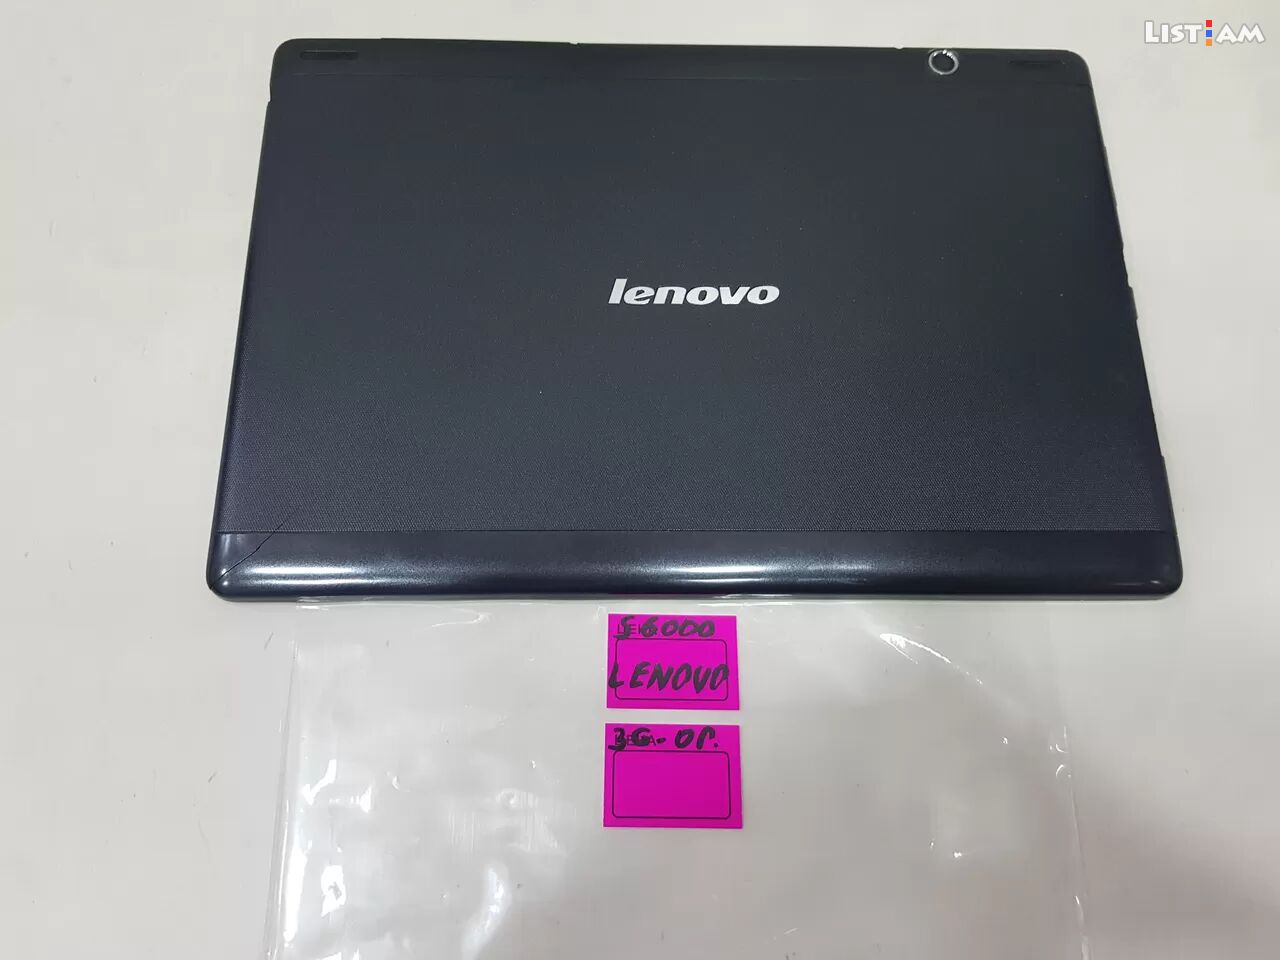 Lenovo s6000